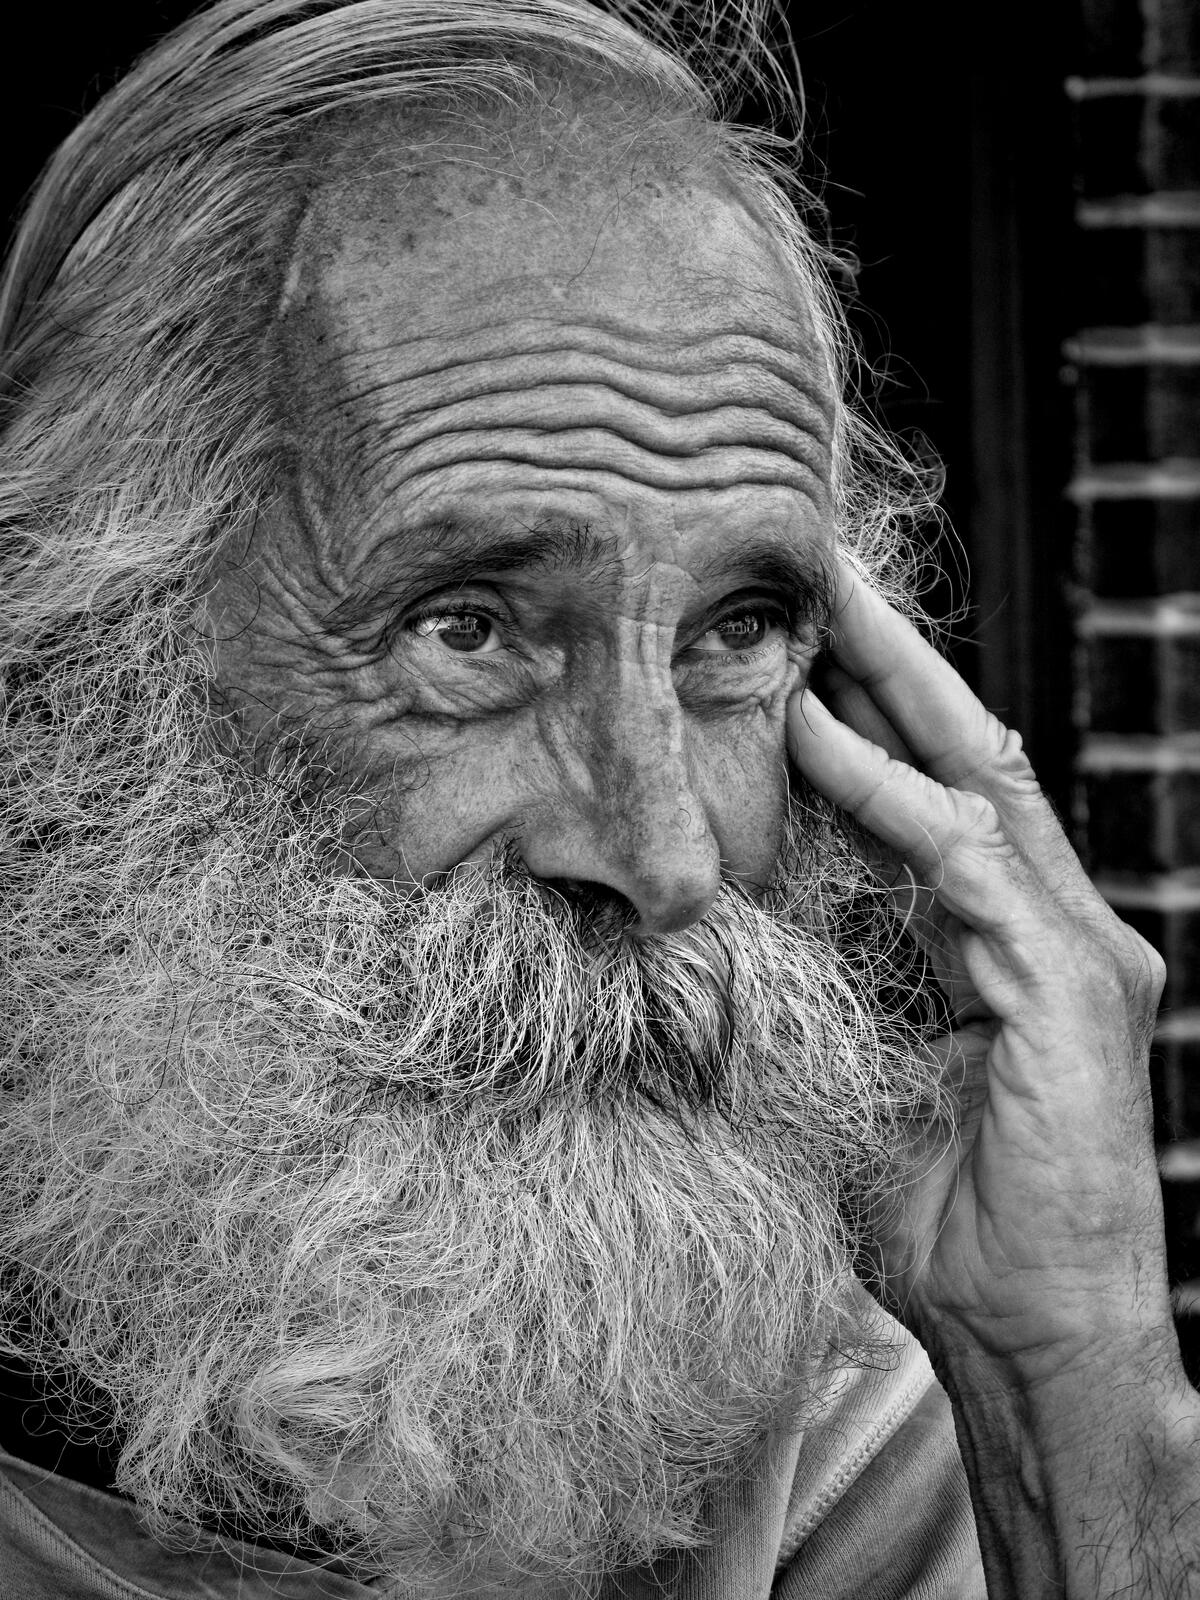 An old man with a big gray beard